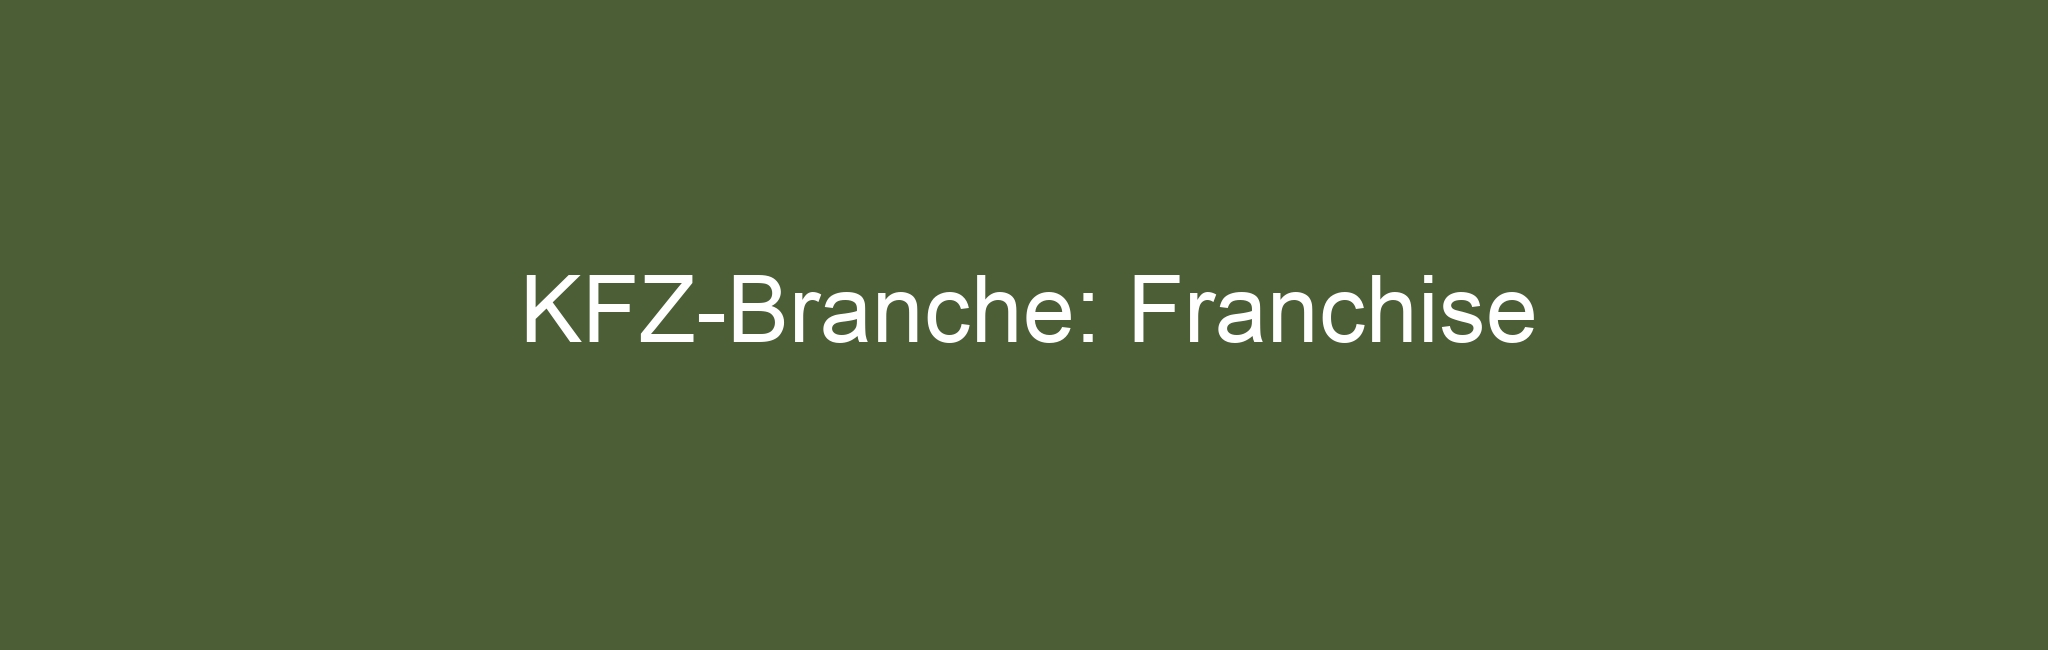 KFZ-Branche: Franchise